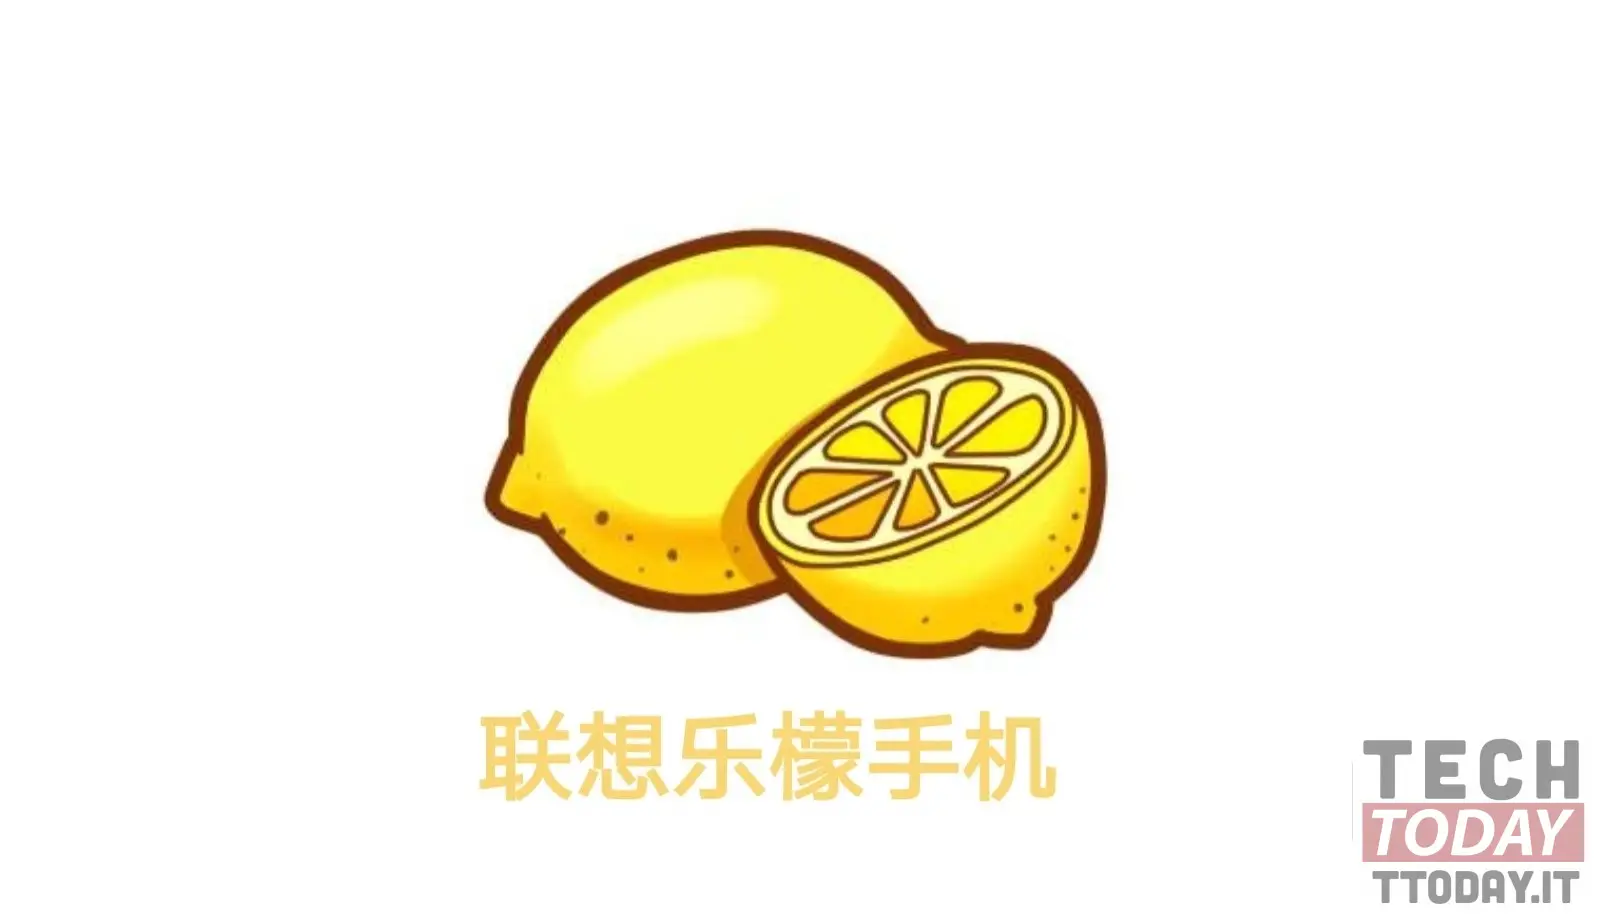 Lenovo Lemon